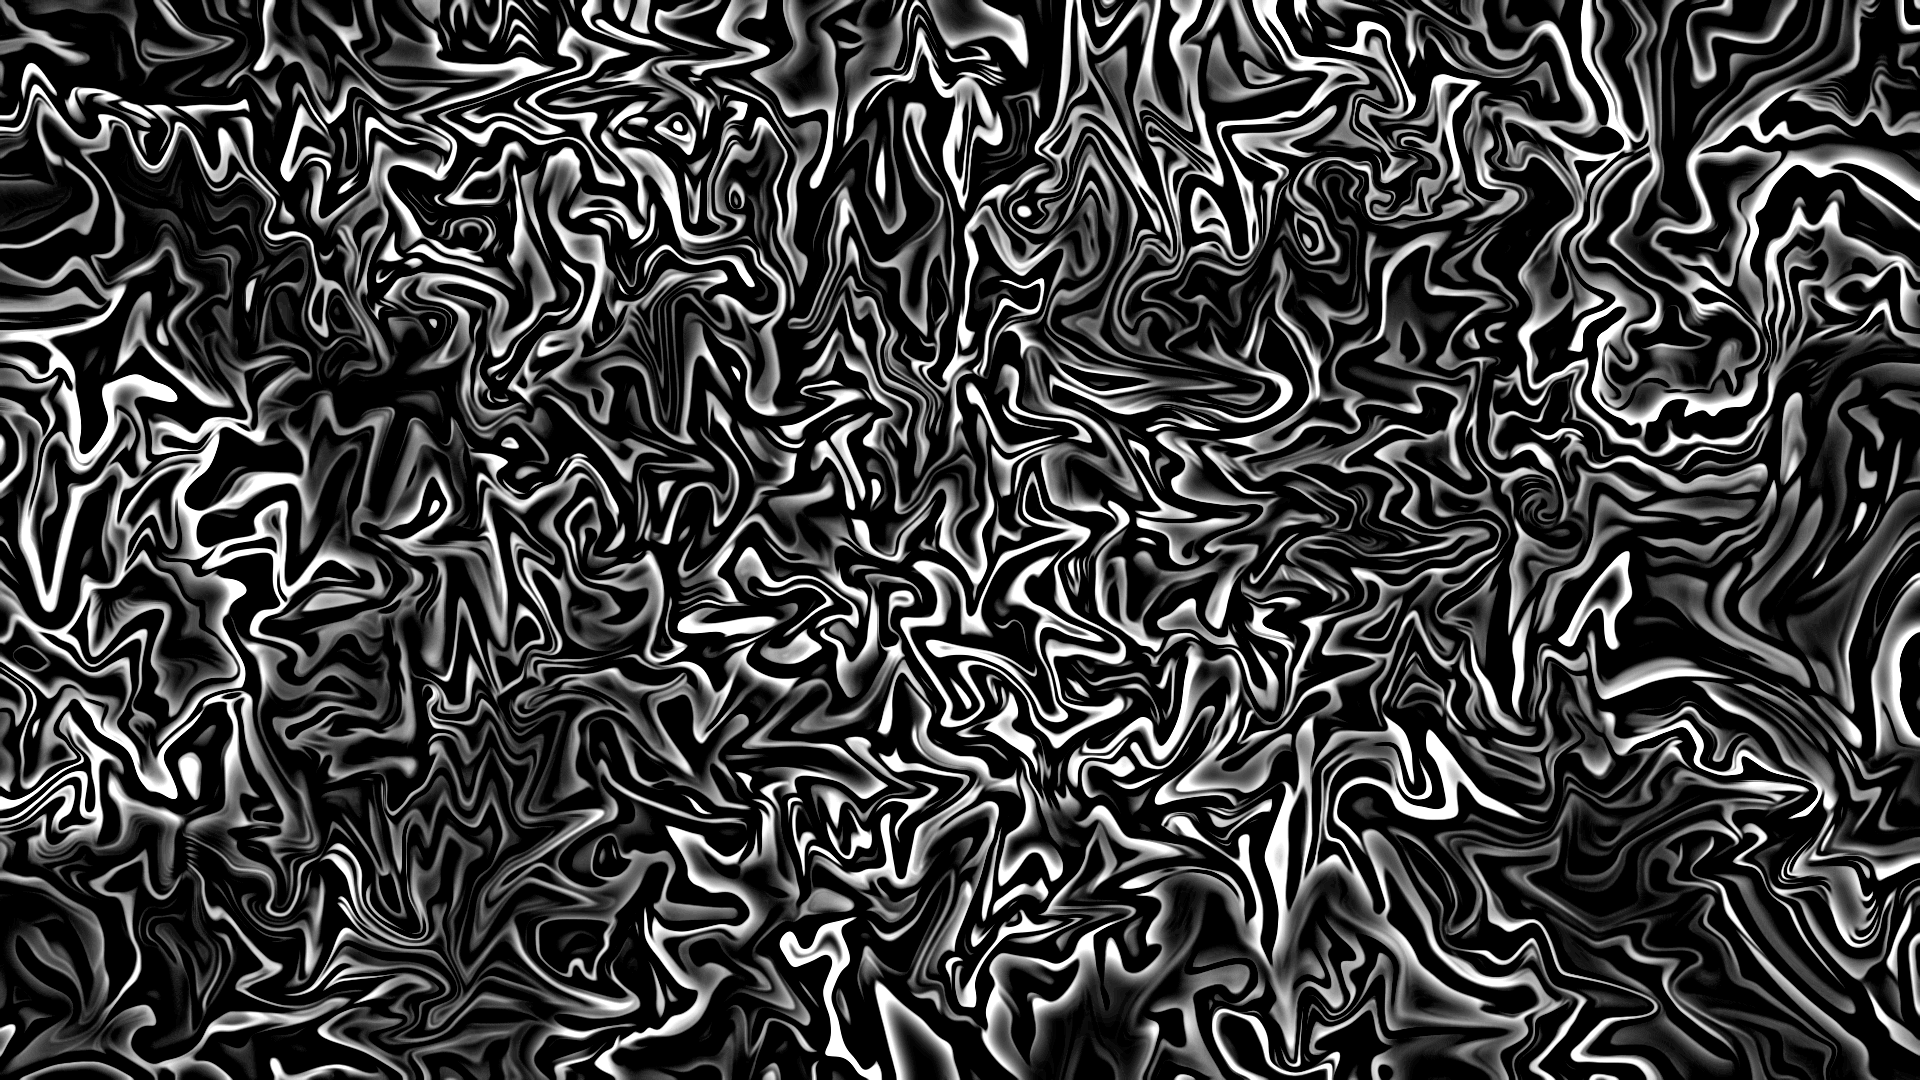 Artistic Black Amp White Digital Art 1920x1080